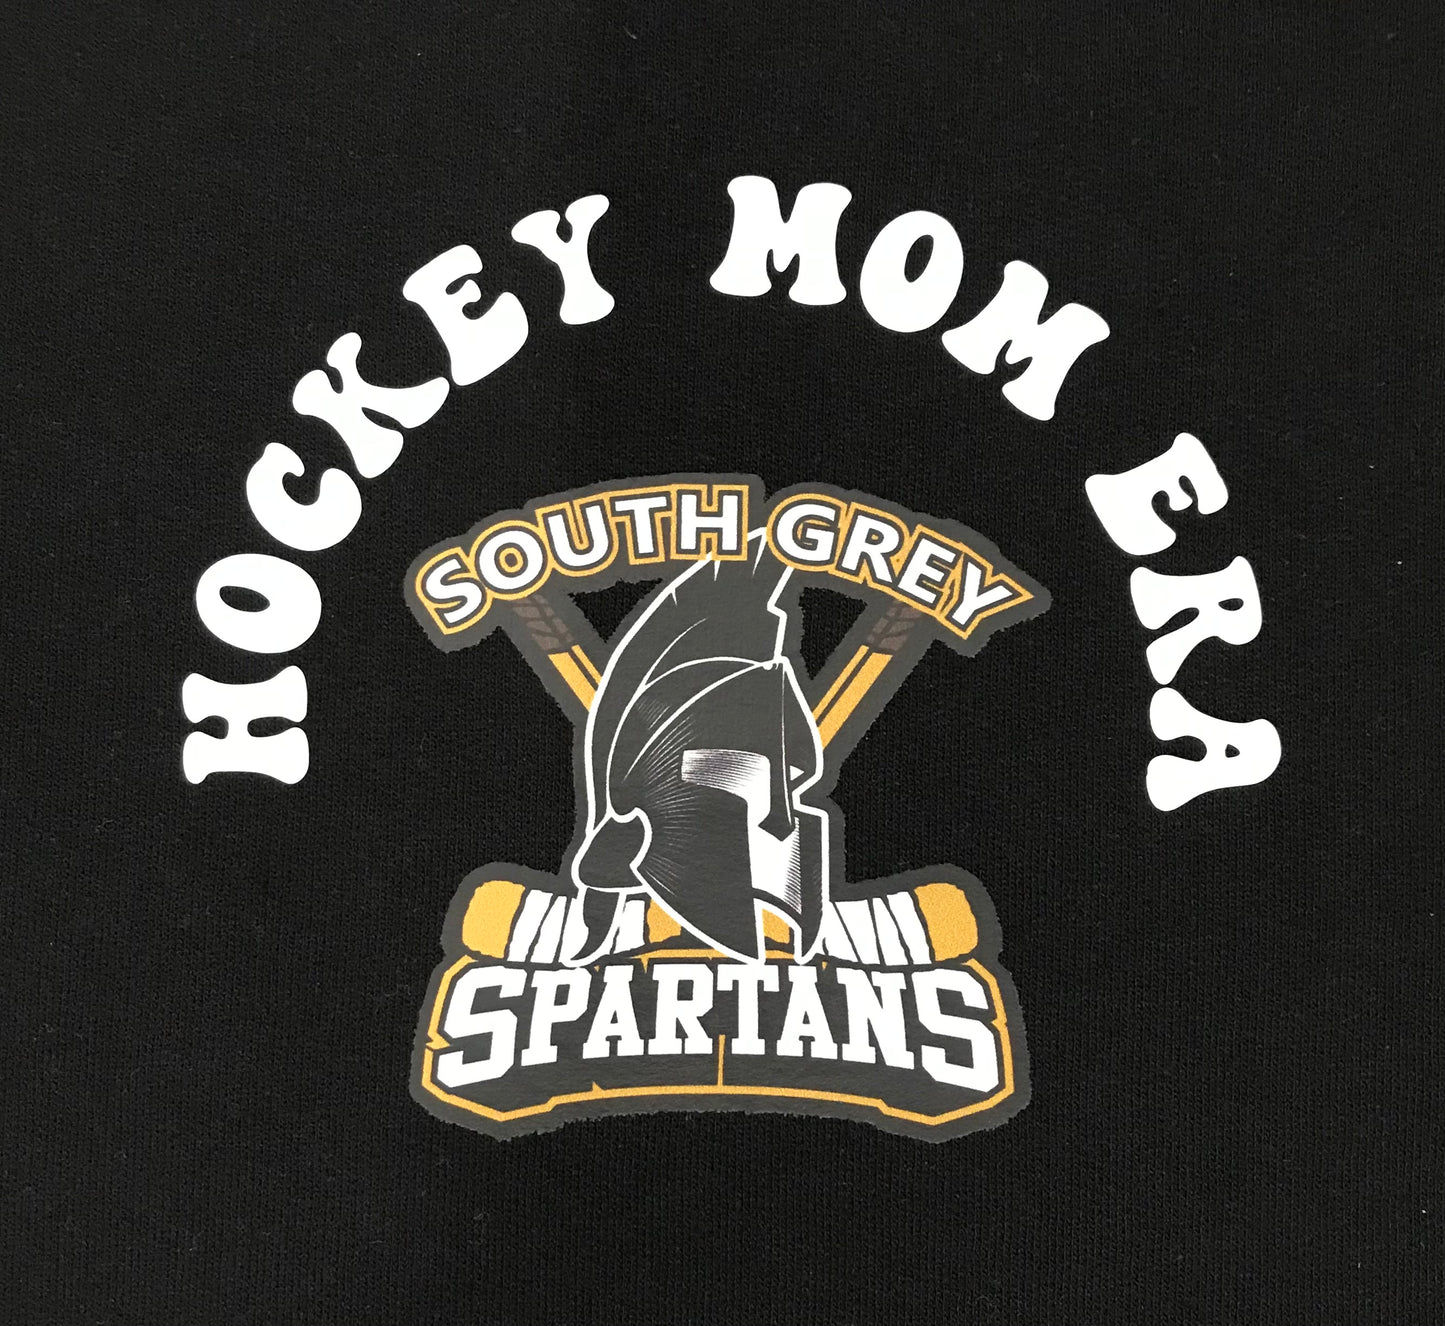 In my hockey mom/grams/grandma/coach Era sweatshirts - Pick your design and your team